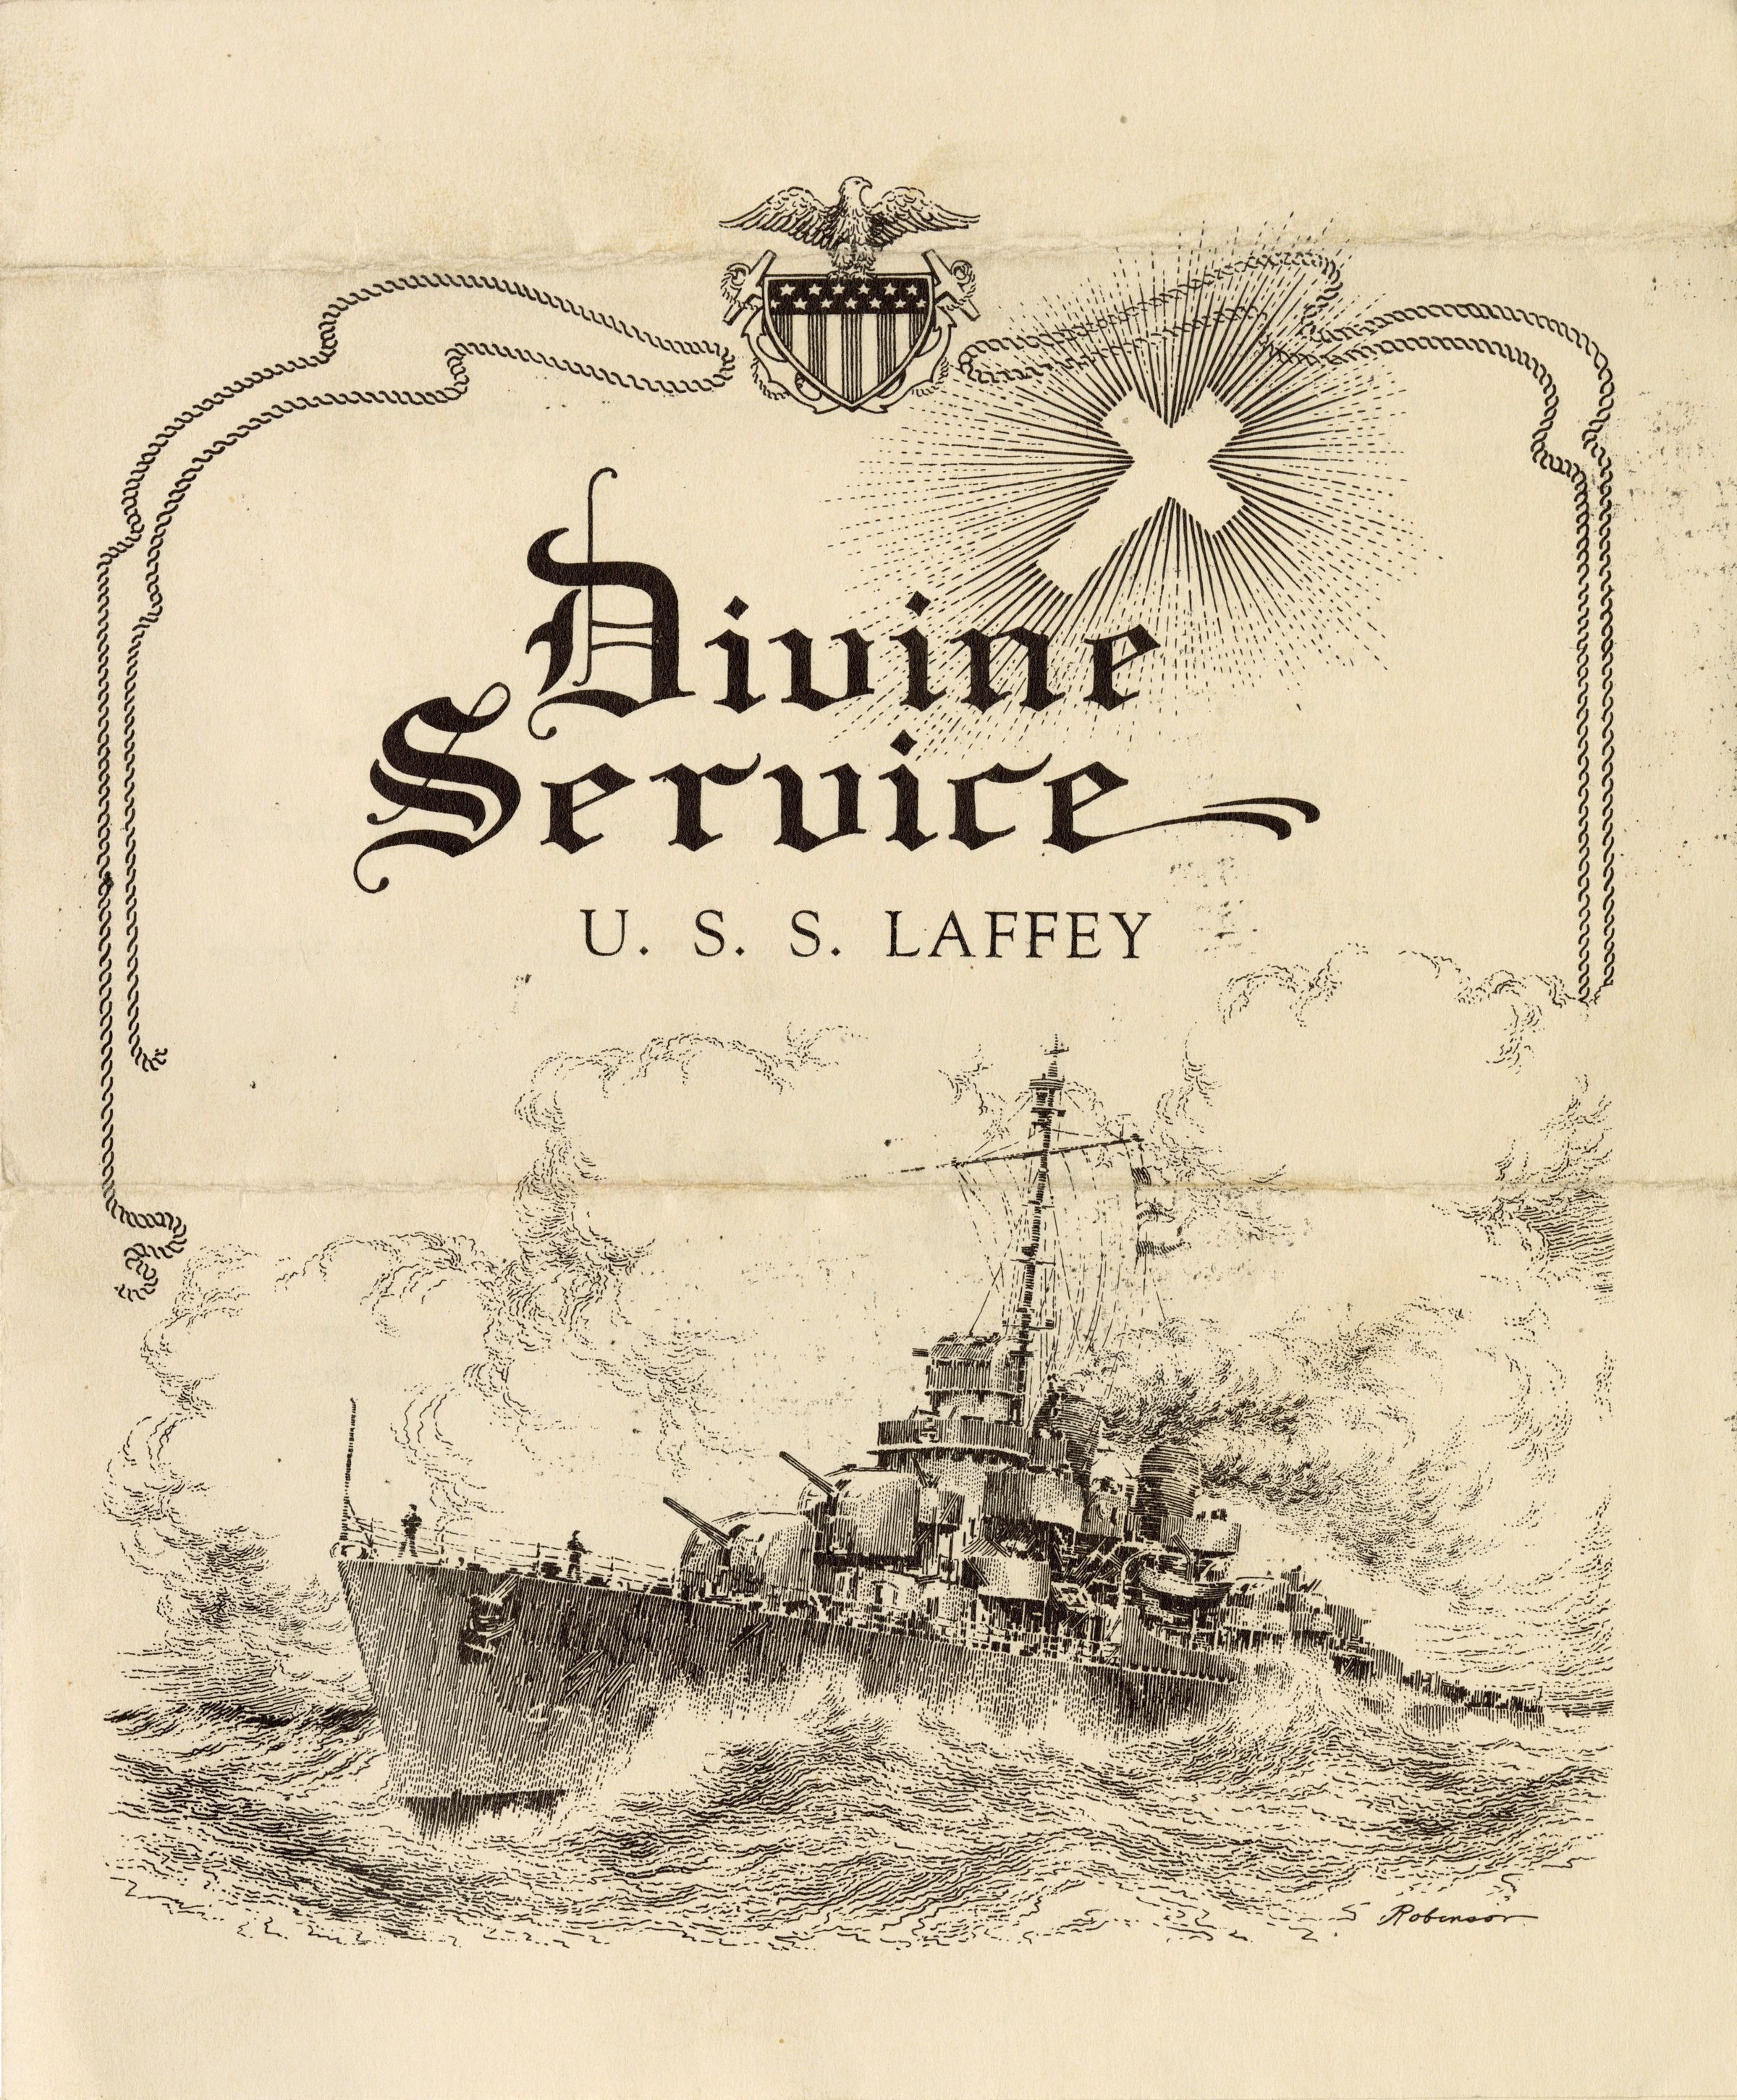 Primary Image of Divine Service Program, USS Laffey